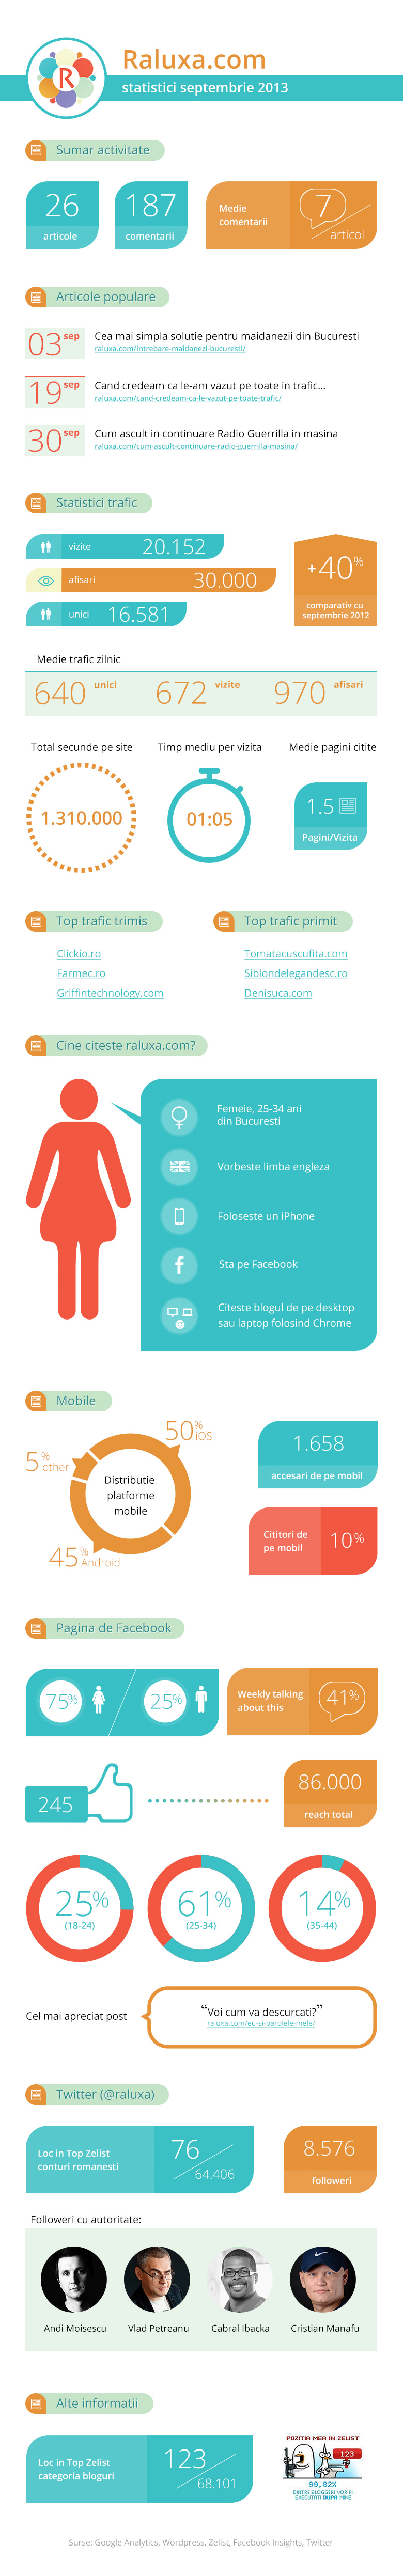 statistici raluxa.com septembrie 2013 infografic